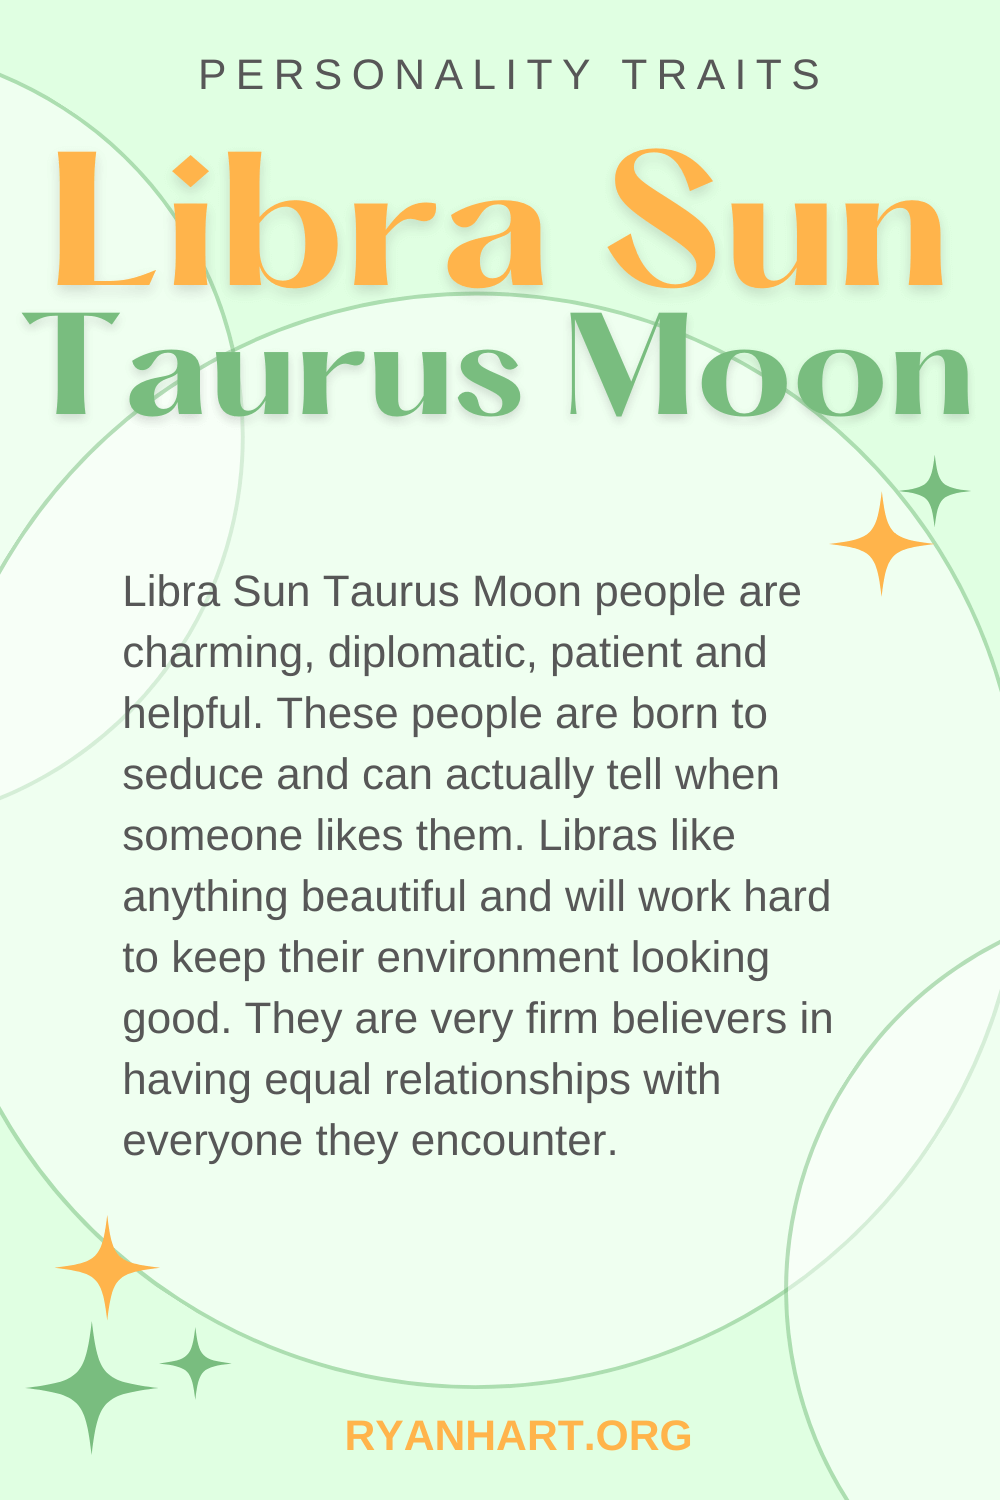  Ciri-ciri Kepribadian Libra Matahari Taurus Bulan